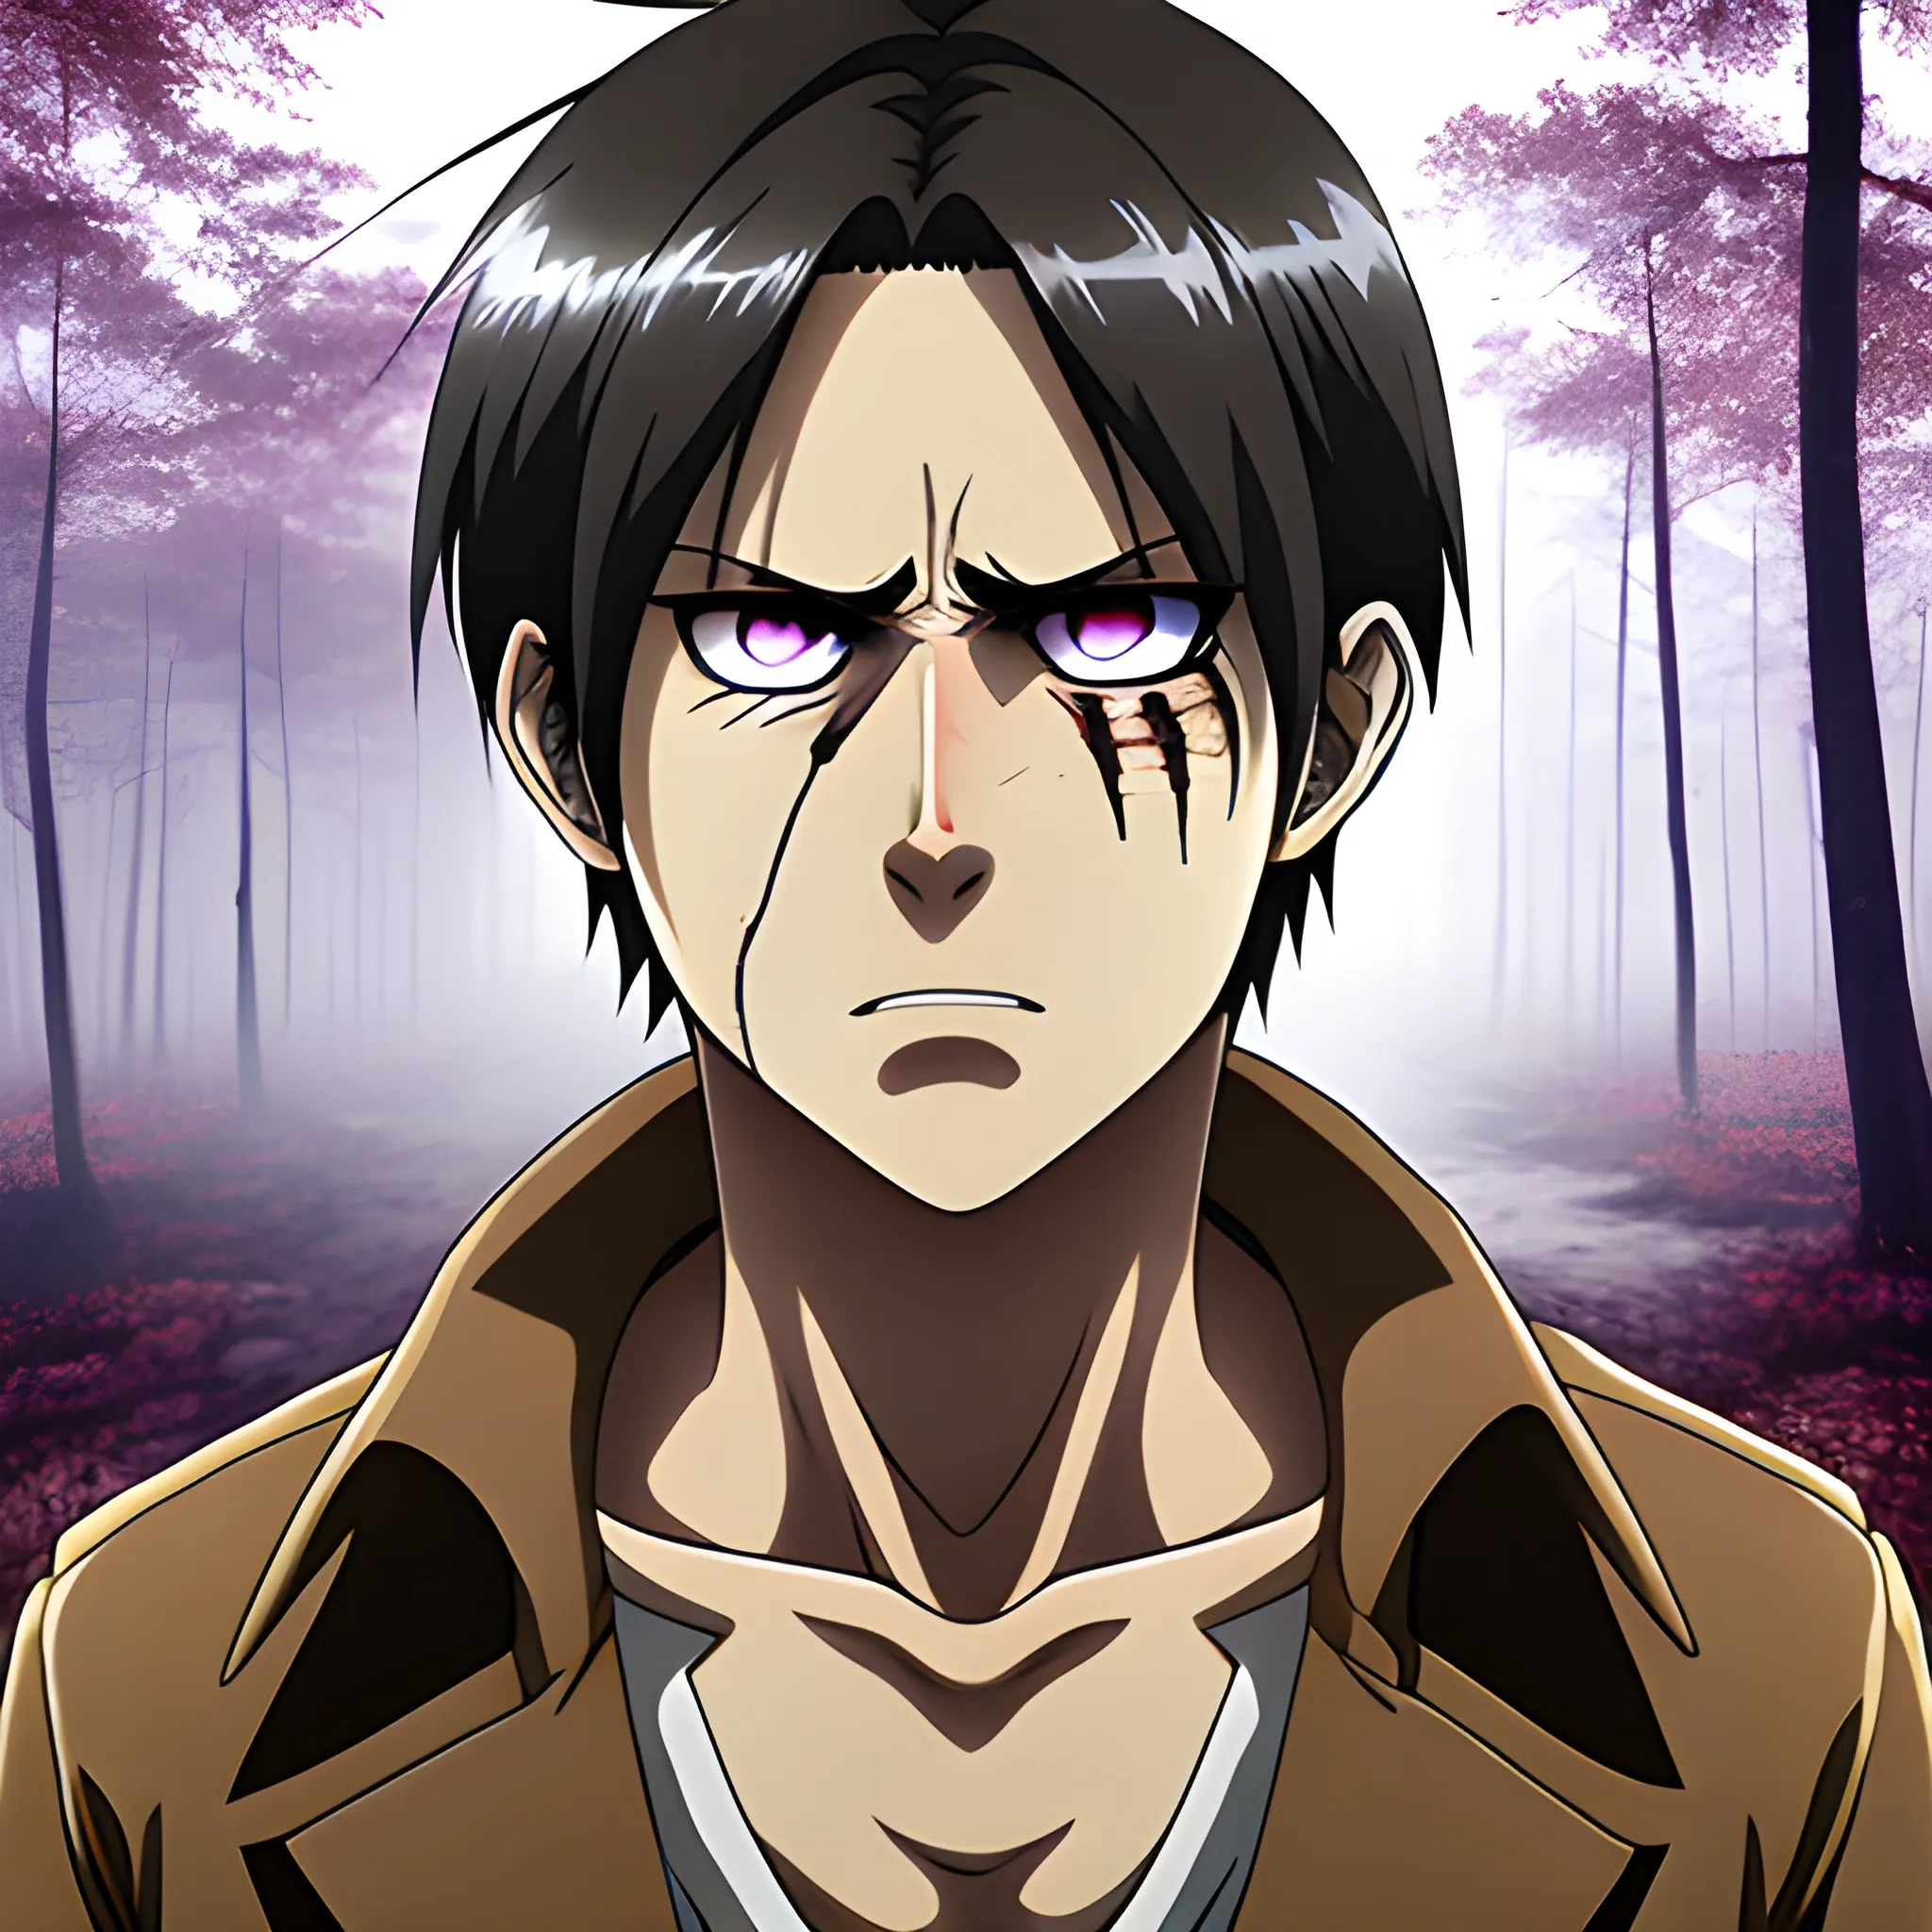 Anime man attack on titan, eren, purple eyes, Scar on one eye, forest background, hyper deformed, 4k.